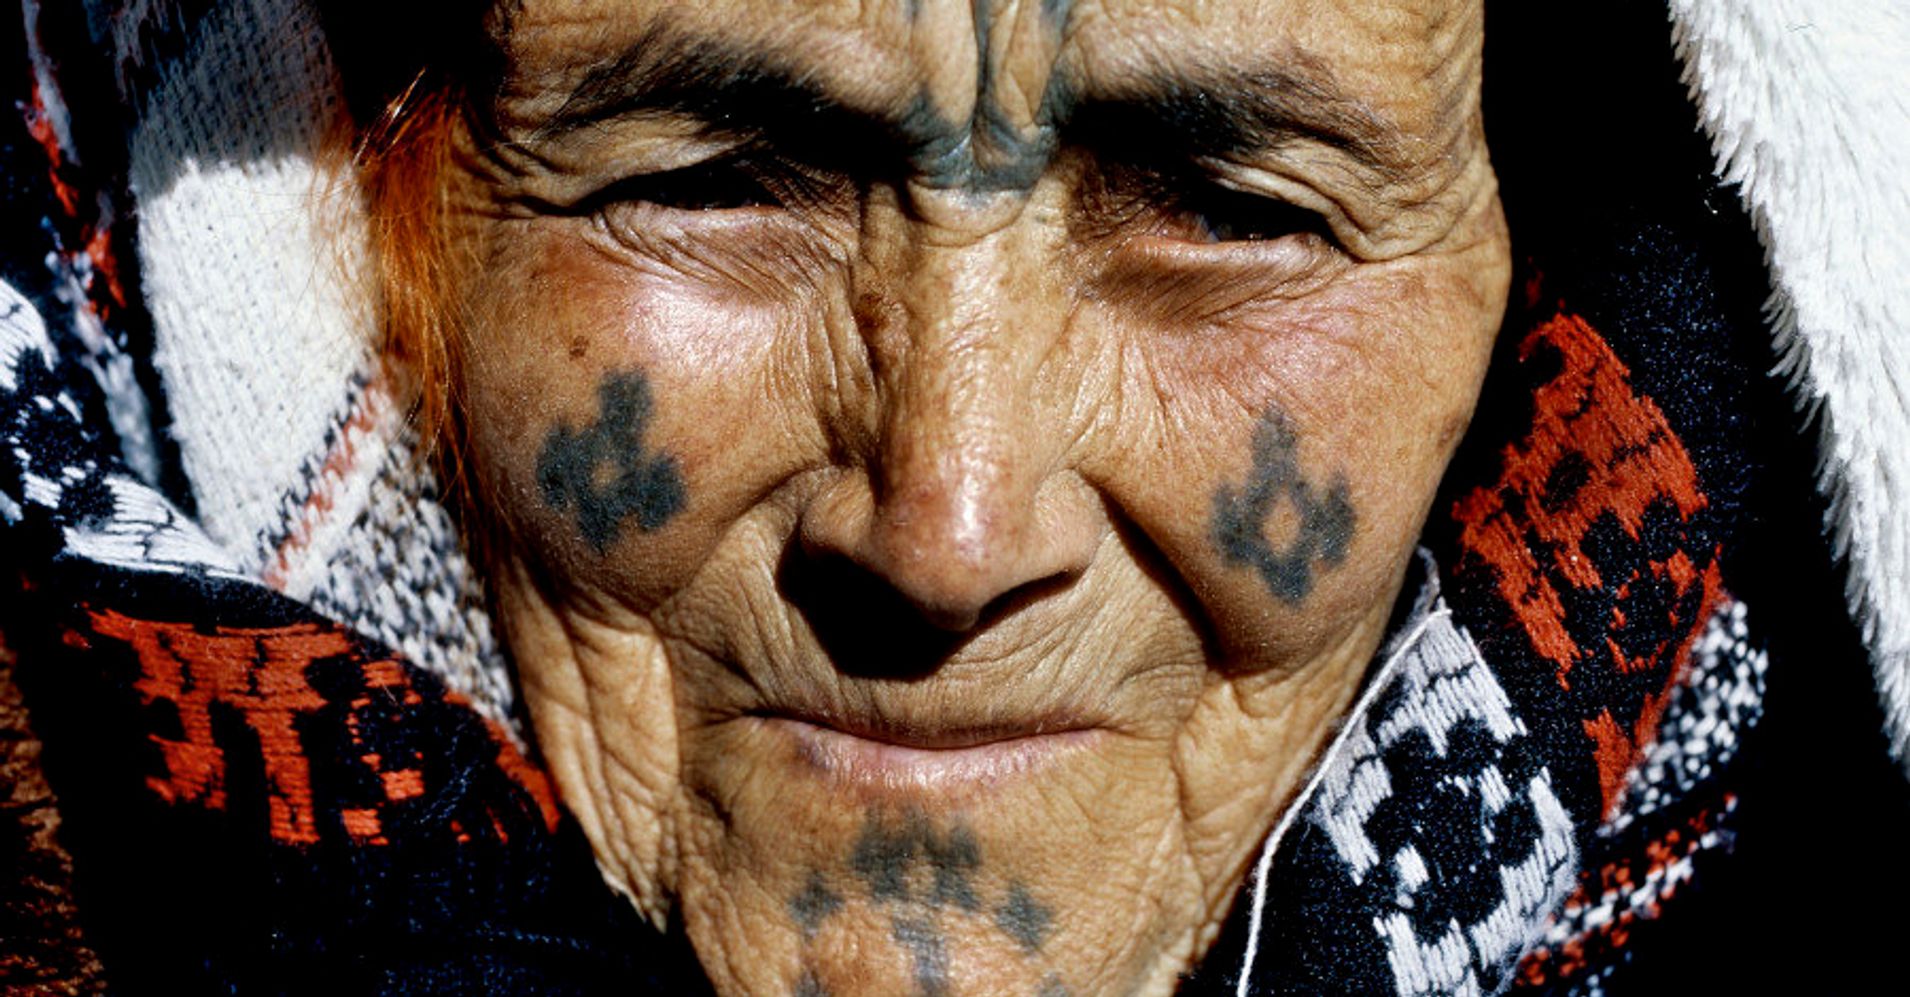 Inked Heritage Berber Women's Tattoos In Algeria HuffPost